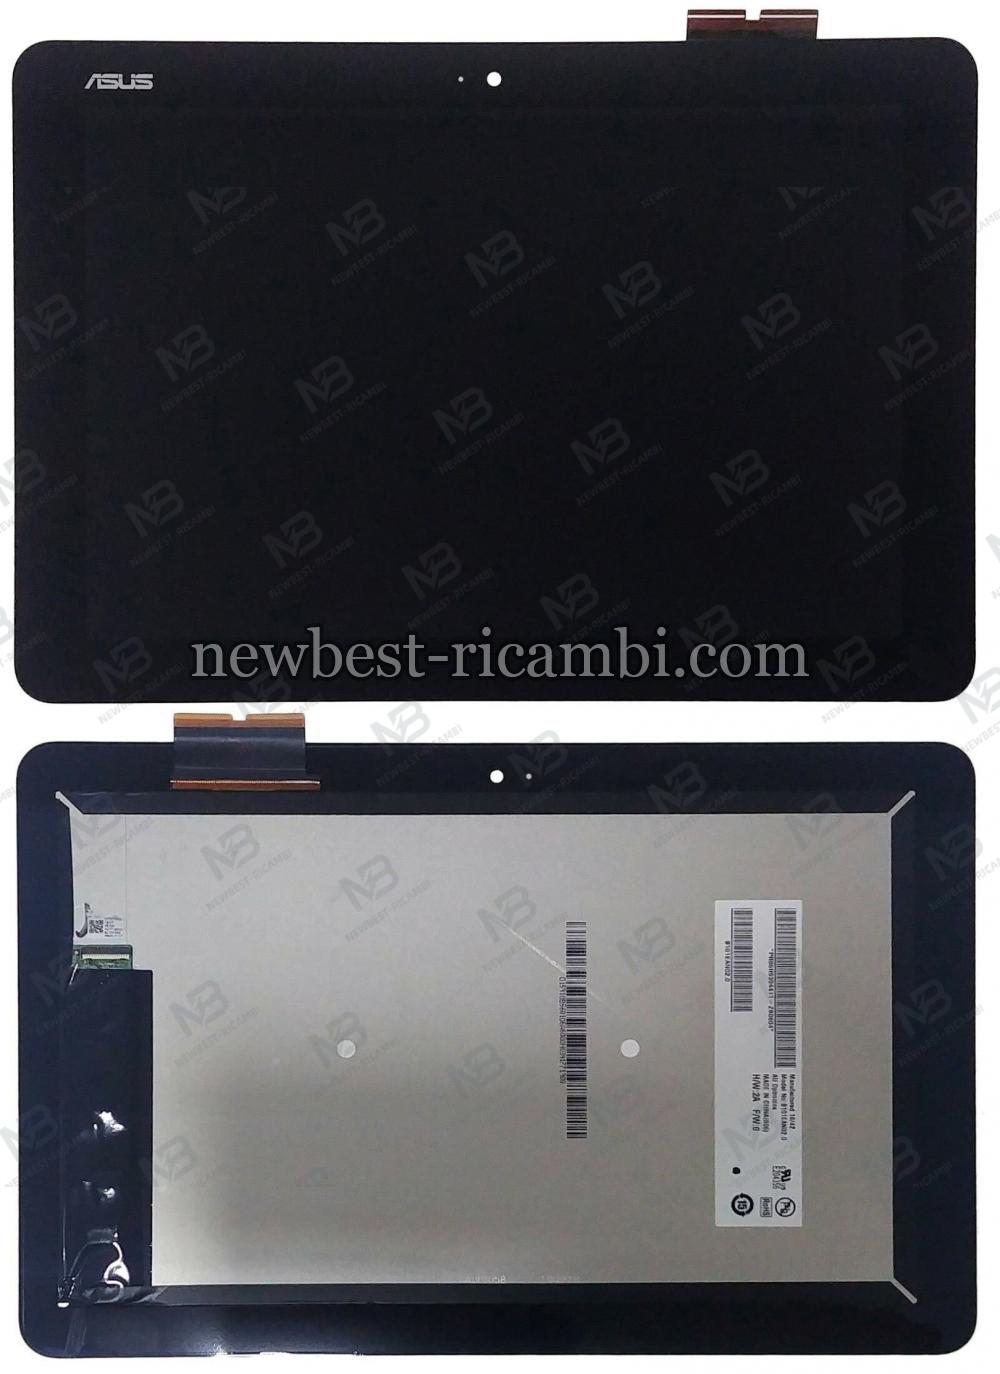 Asus Transformer Book T101ha H101h Touch+lcd Black